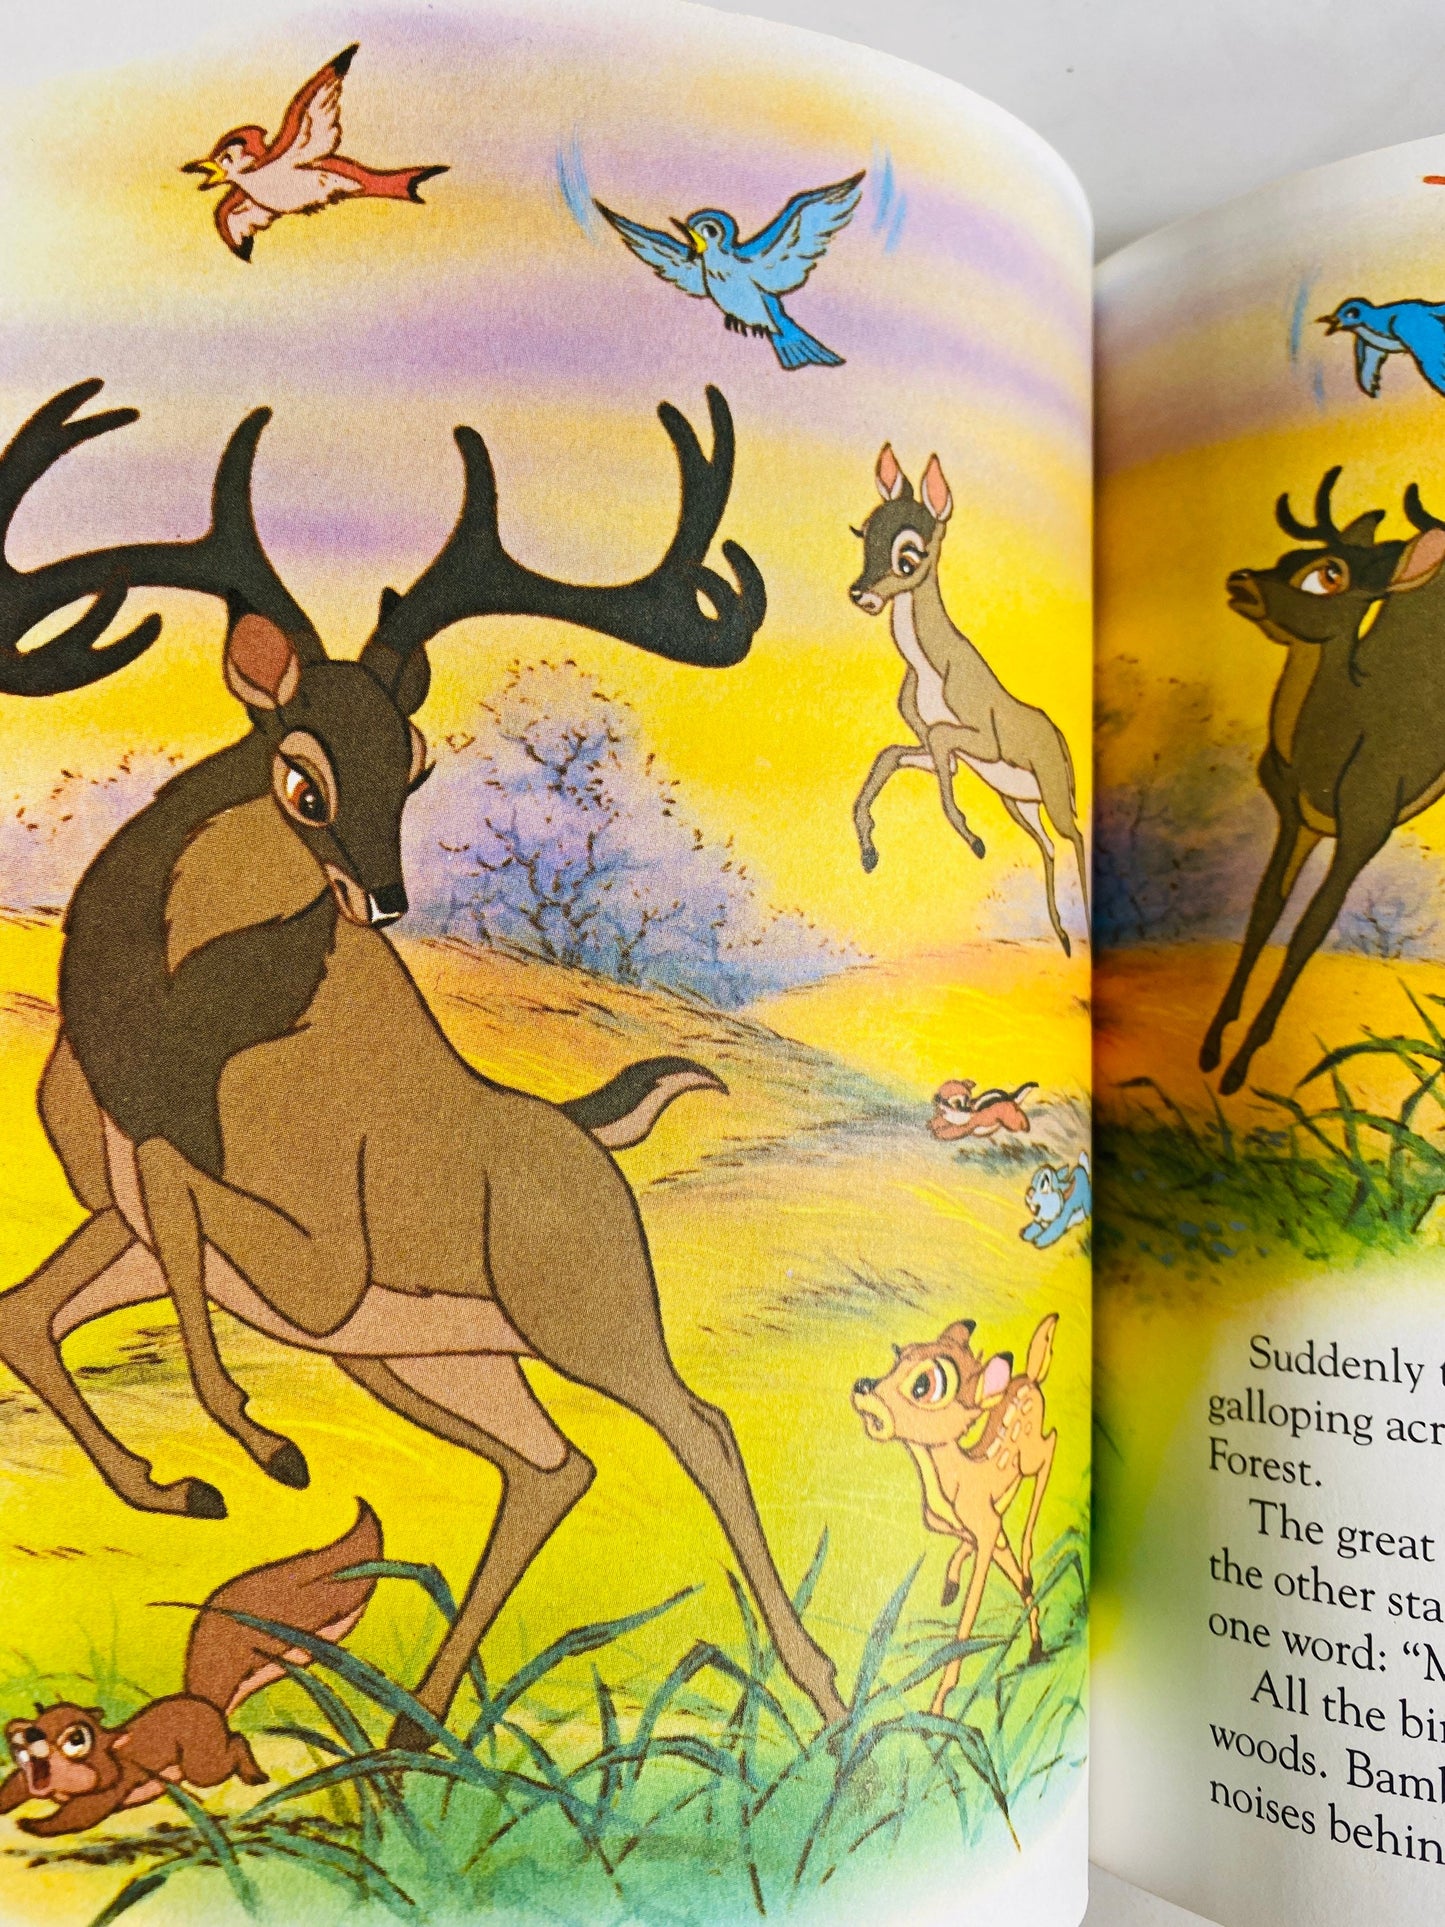 1984 Bambi Walt Disney Little Golden Book with pink back cover Children's at home reading Felix Salten Ron Dias Vintage book gift.